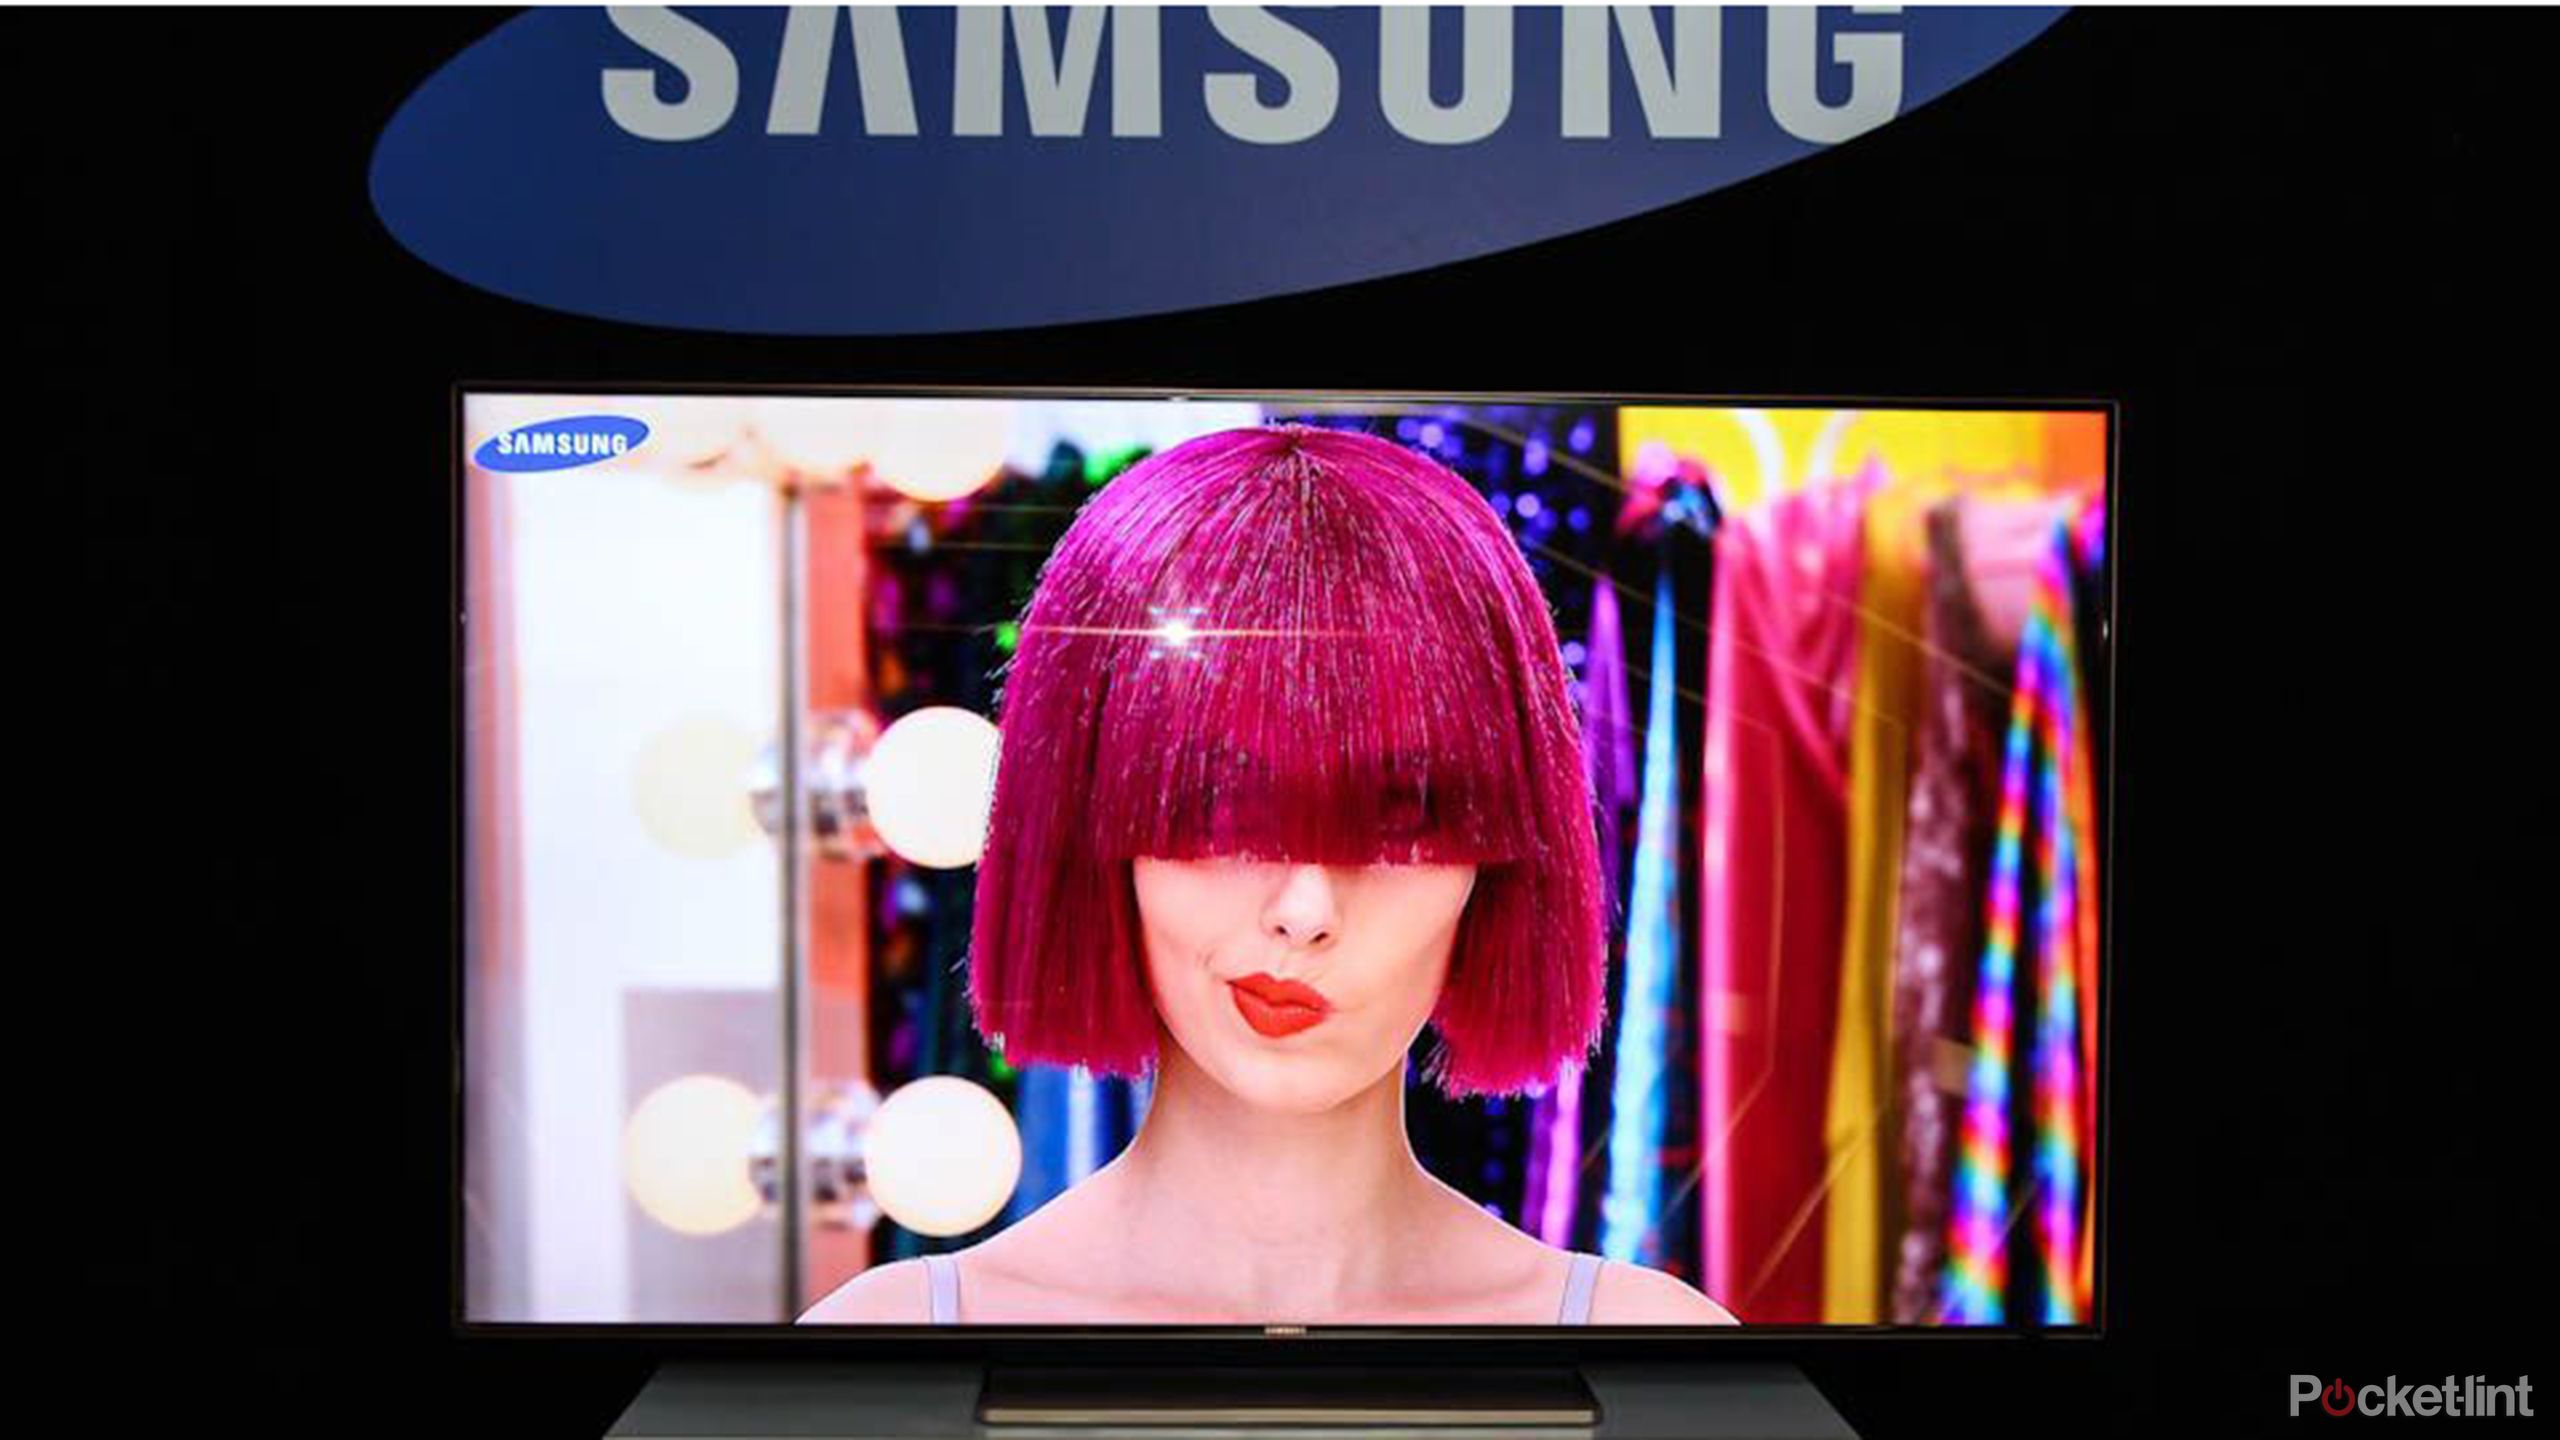 5 reasons to buy a Samsung TV over a Vizio TV